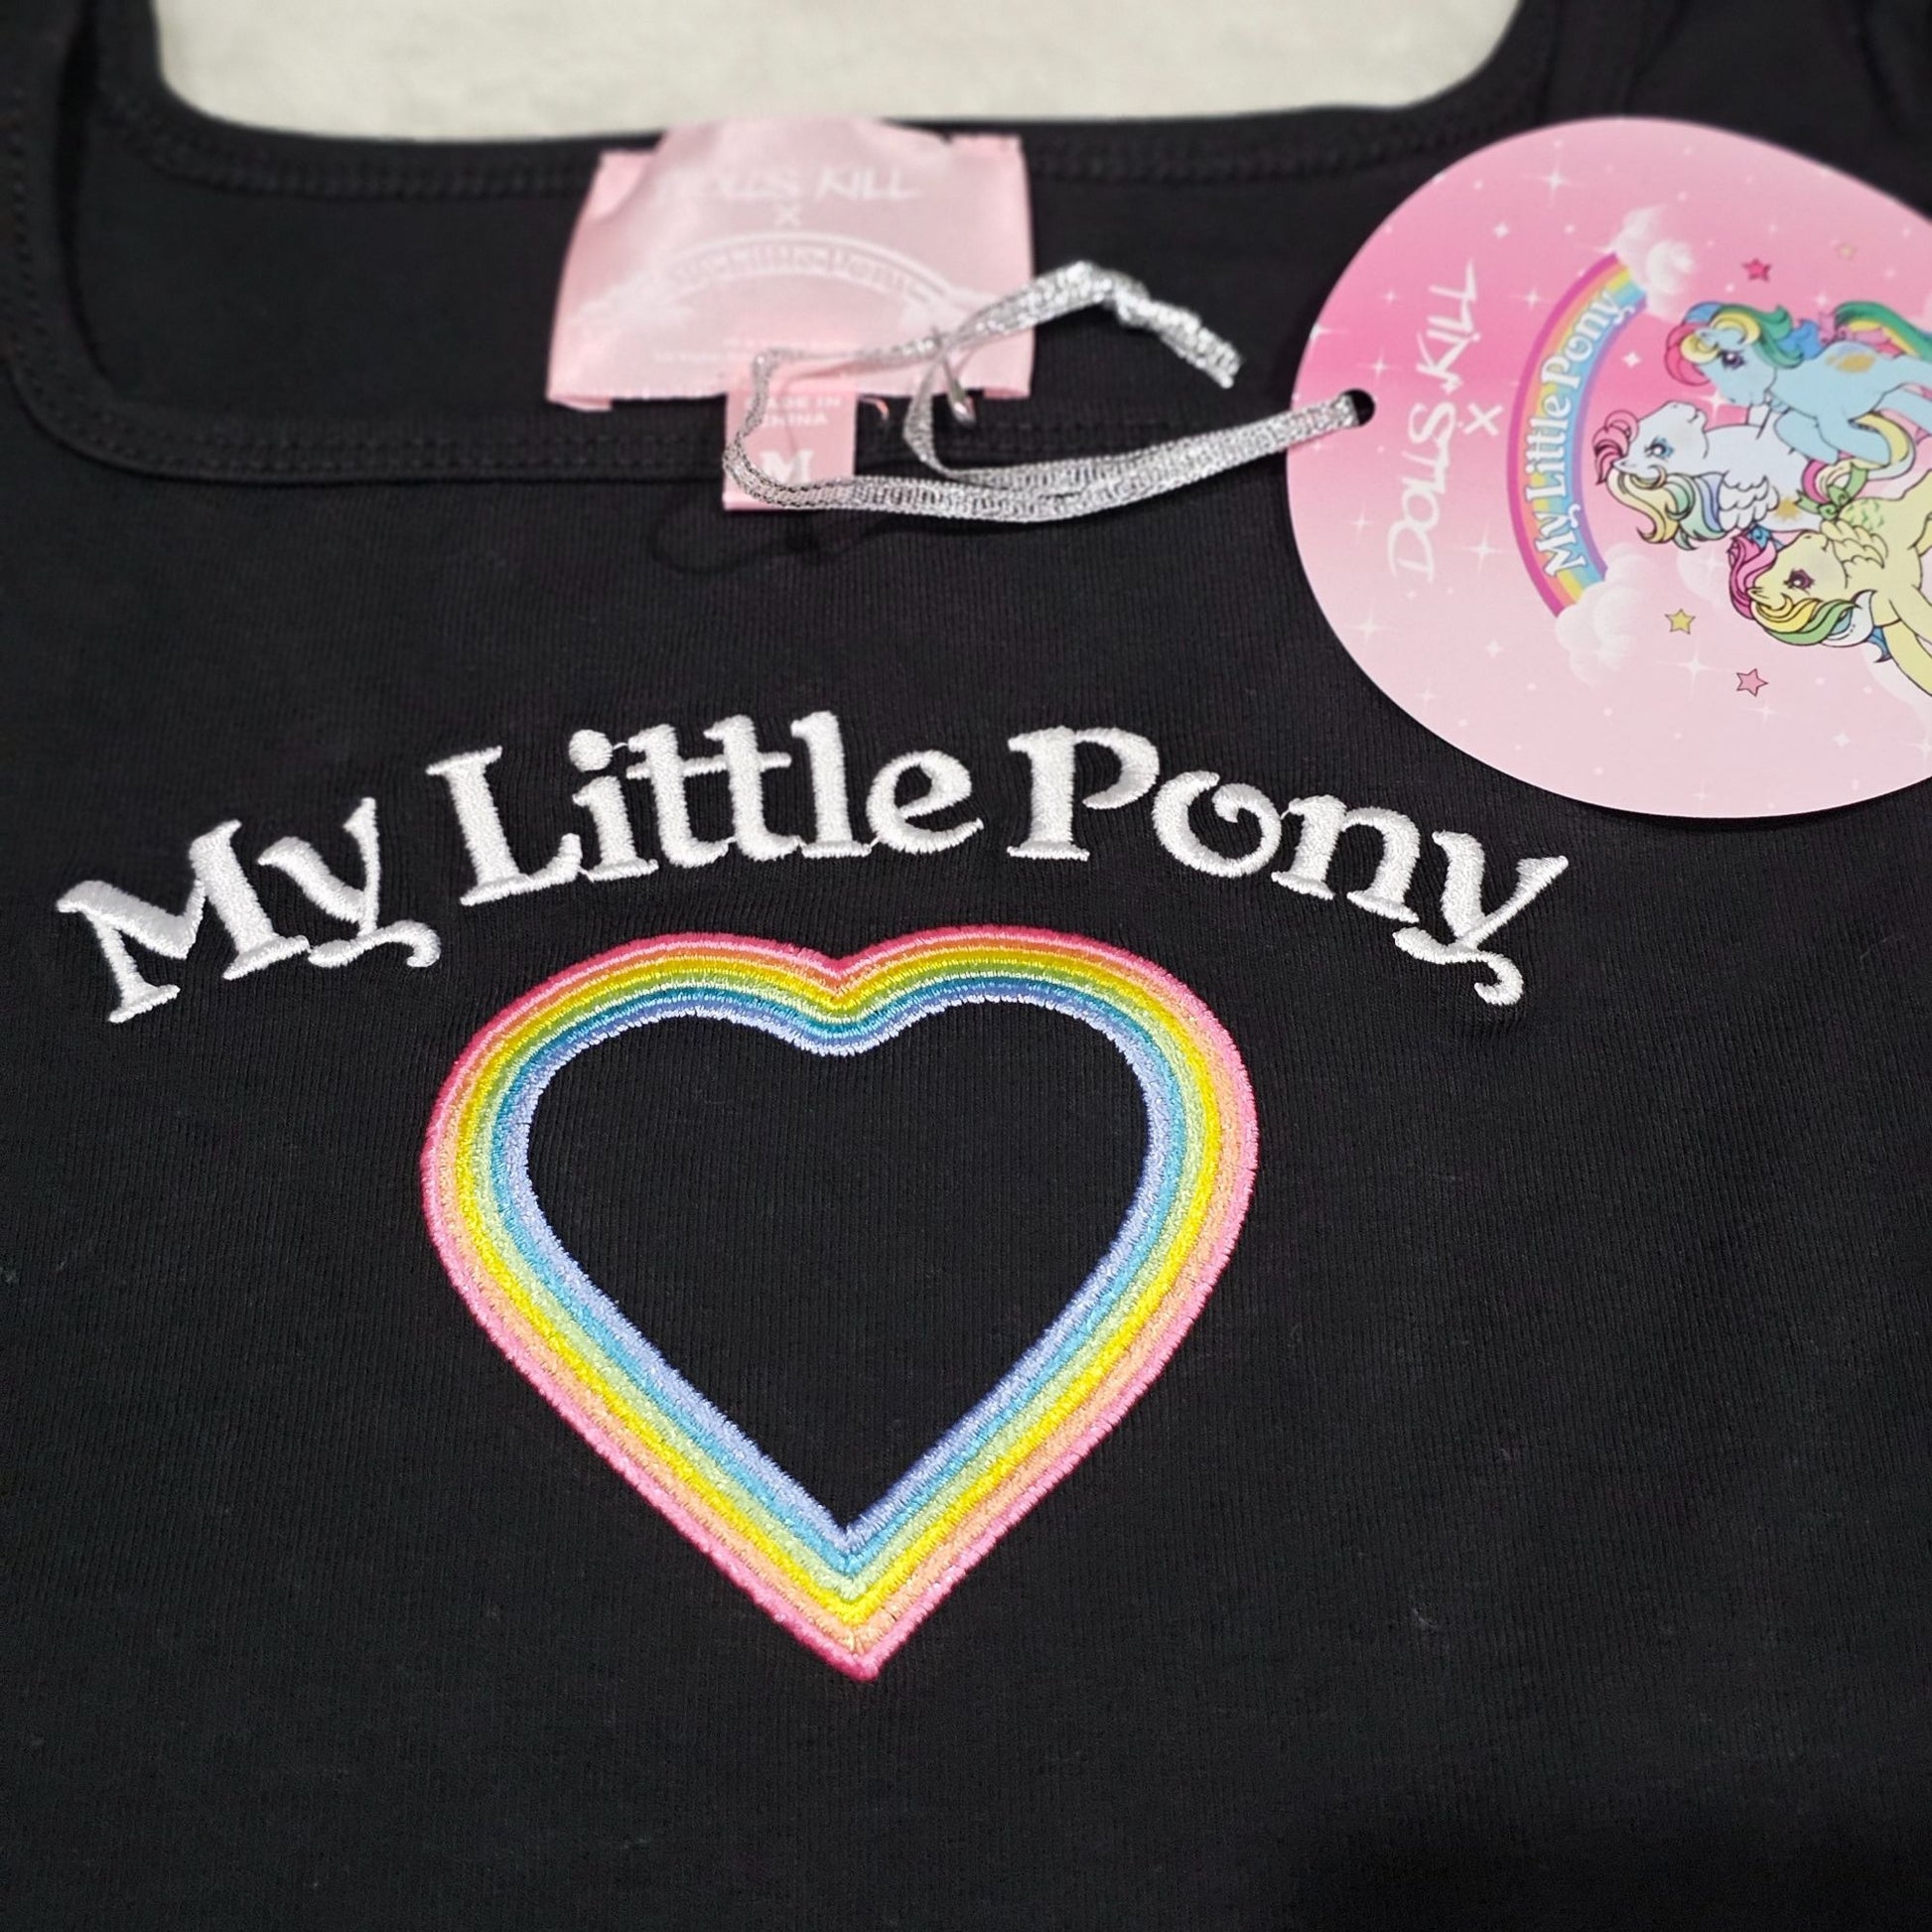 Dolls kill x My Little Pony All My Love Baby Tee | Heart Embroidery M - Dolls Kill - Shirts